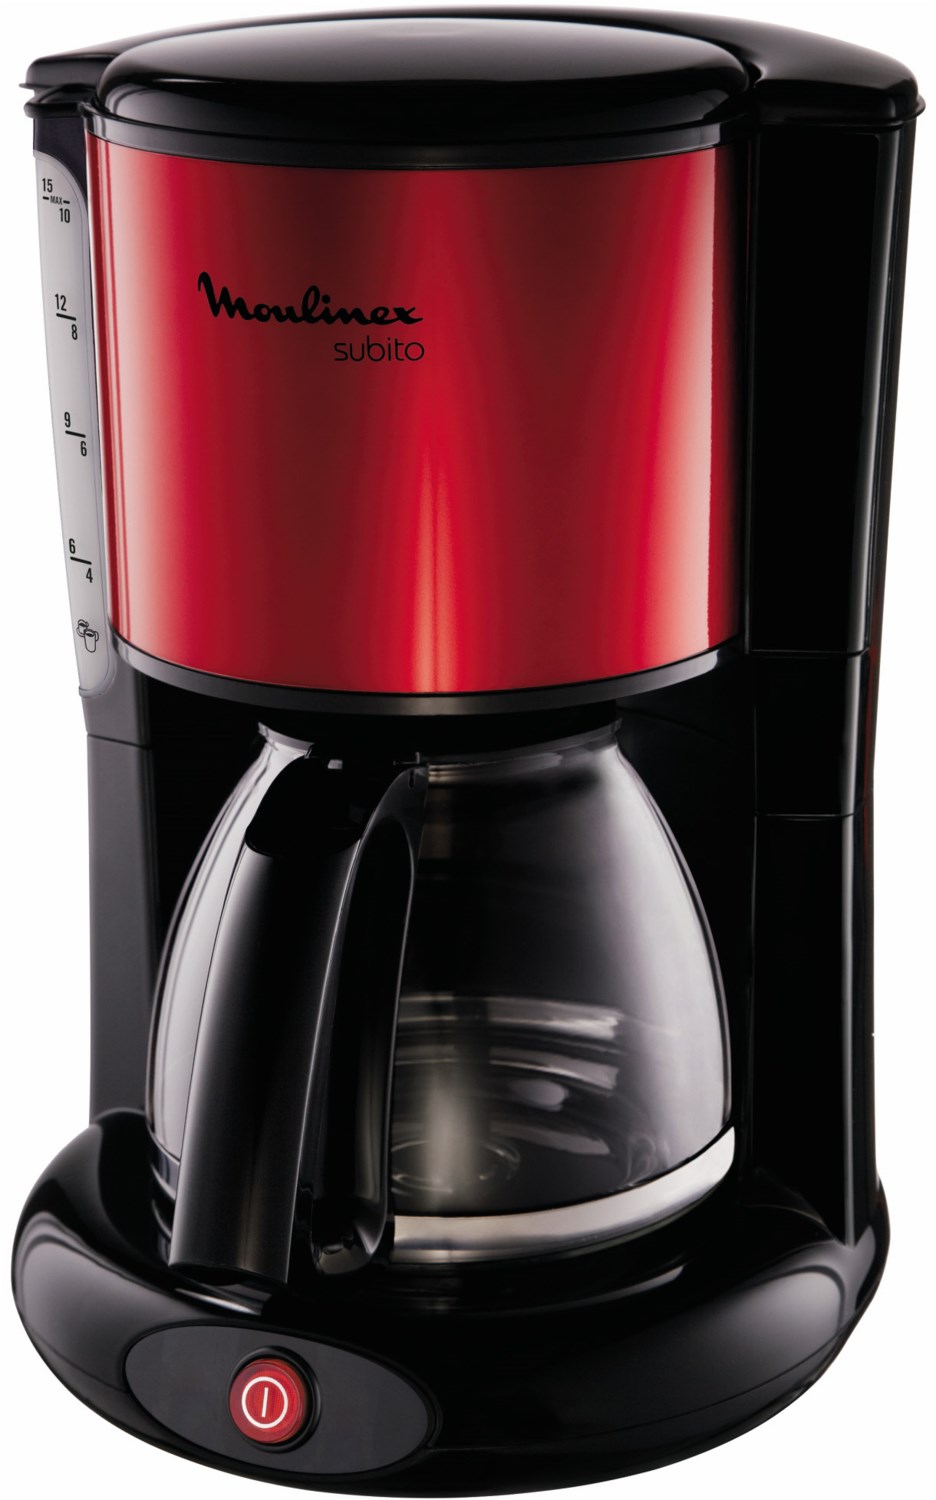 FG 360 D Kaffeeautomat rot metallic/schwarz von Moulinex